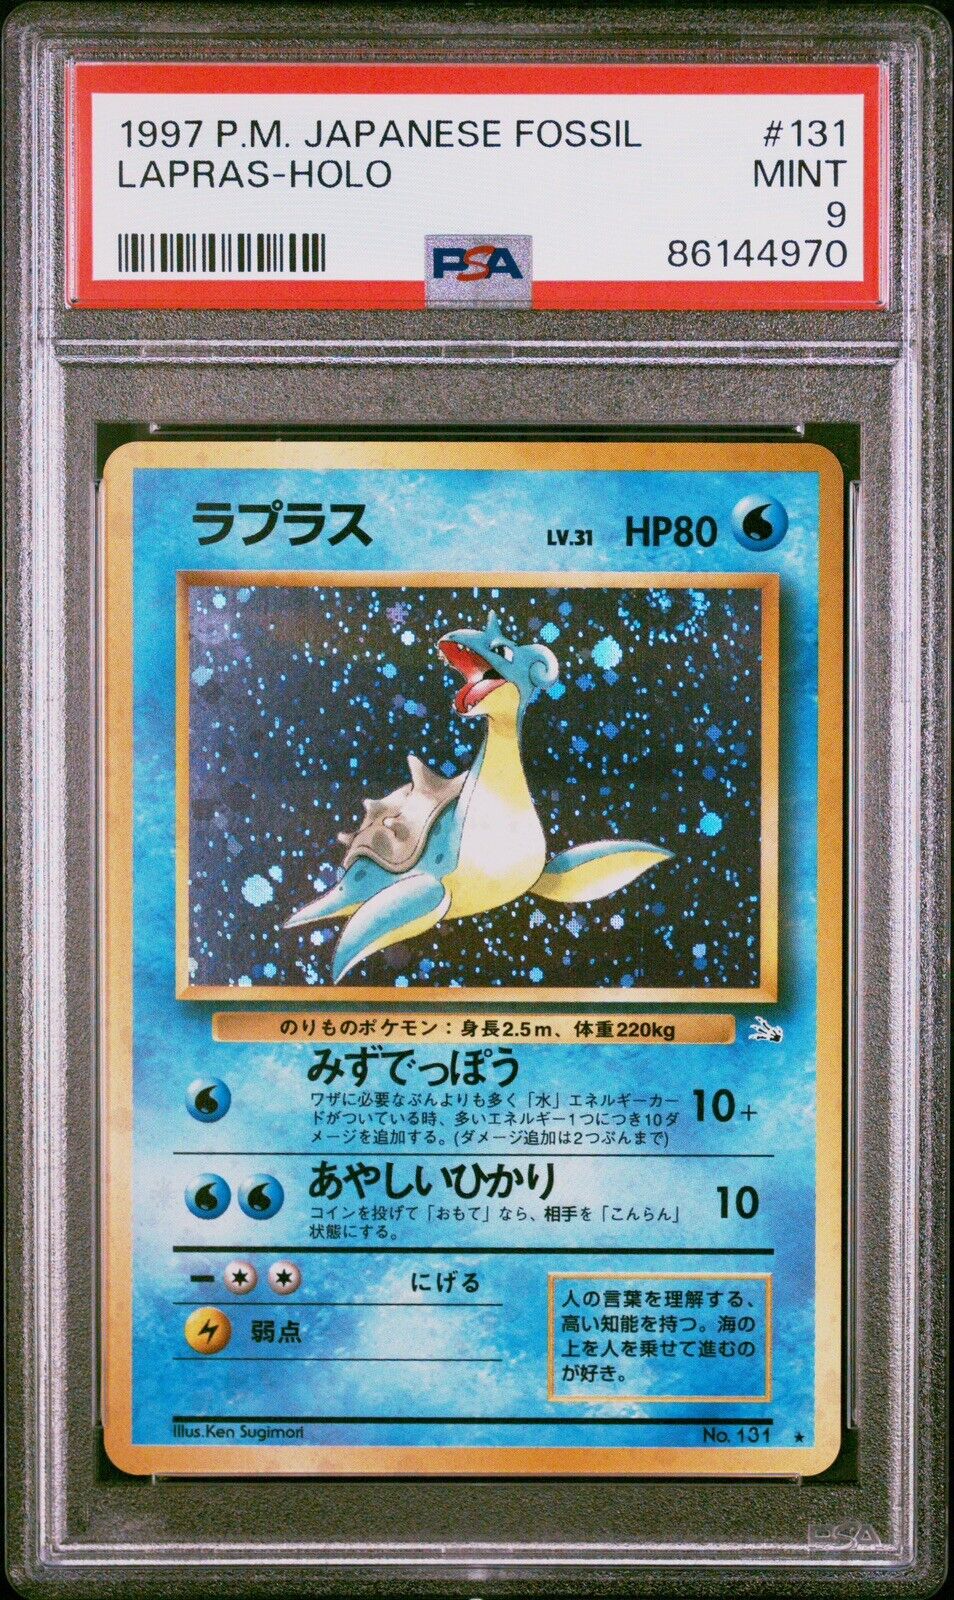 Pokémon TCG Lapras Japanese Fossil Holo 131 Unlimited Holo Swirl - PSA 9